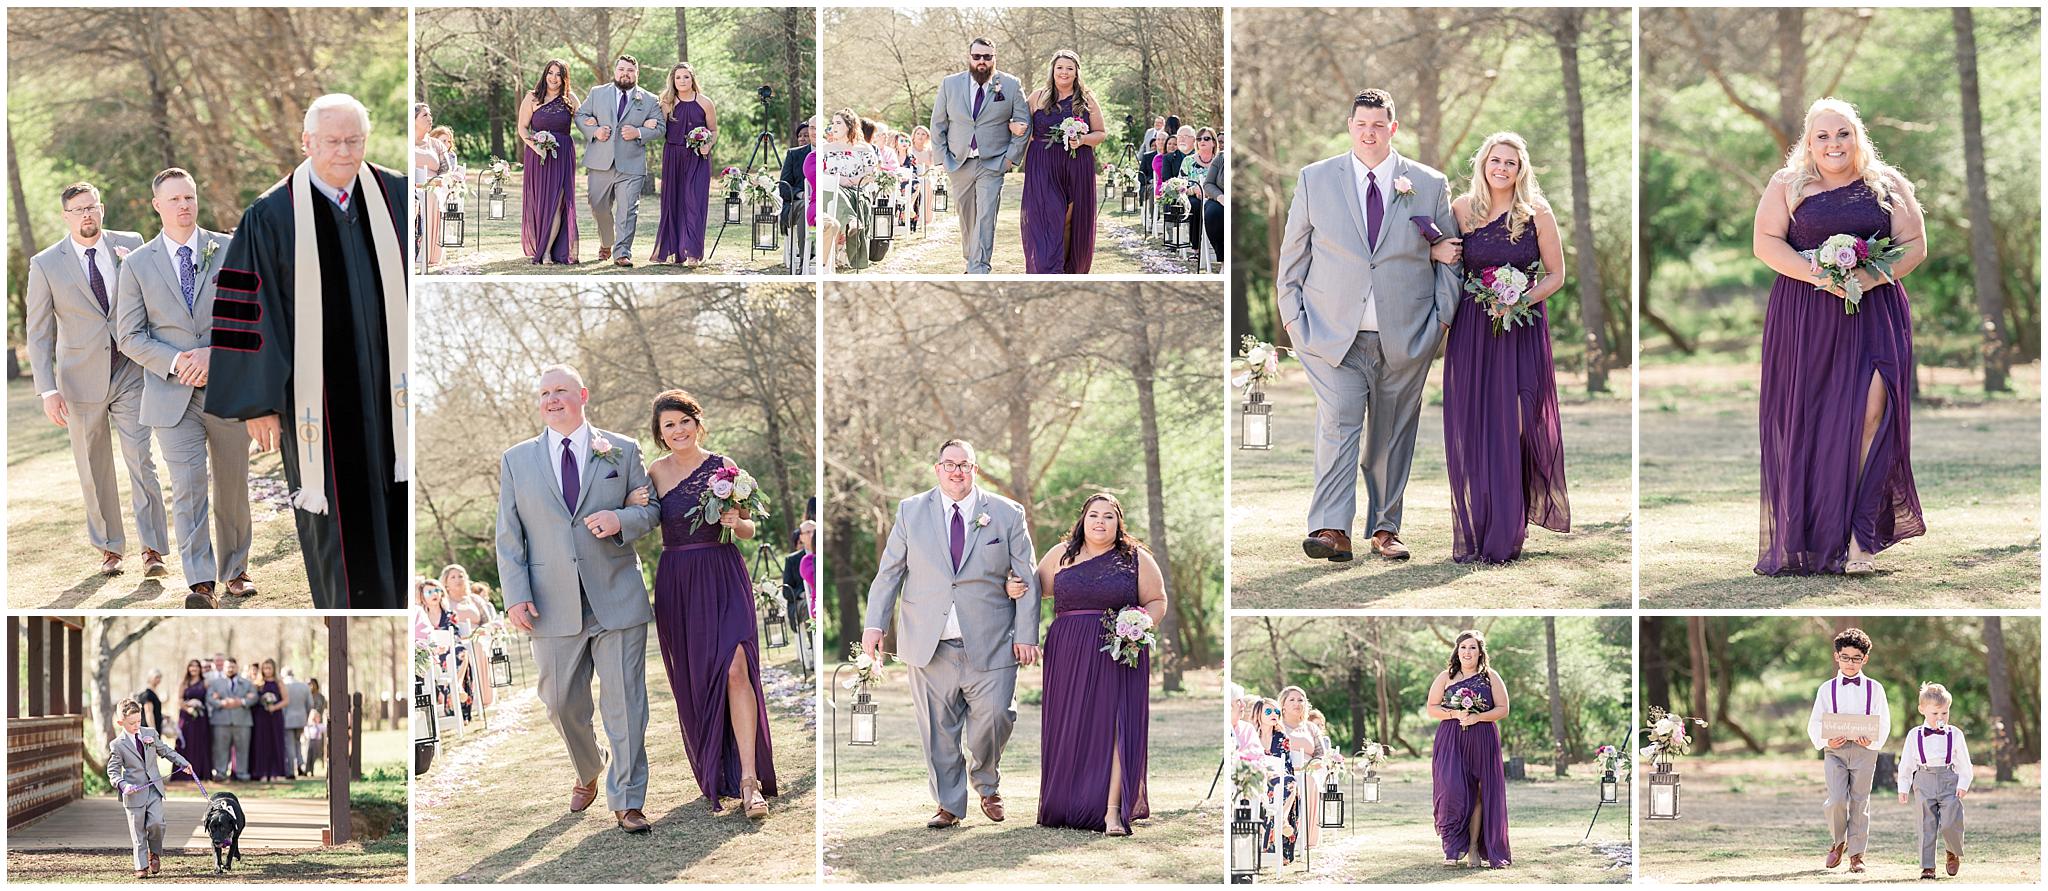 9 oaks farm wedding ceremony pictures arbor purple flowers_0004.jpg